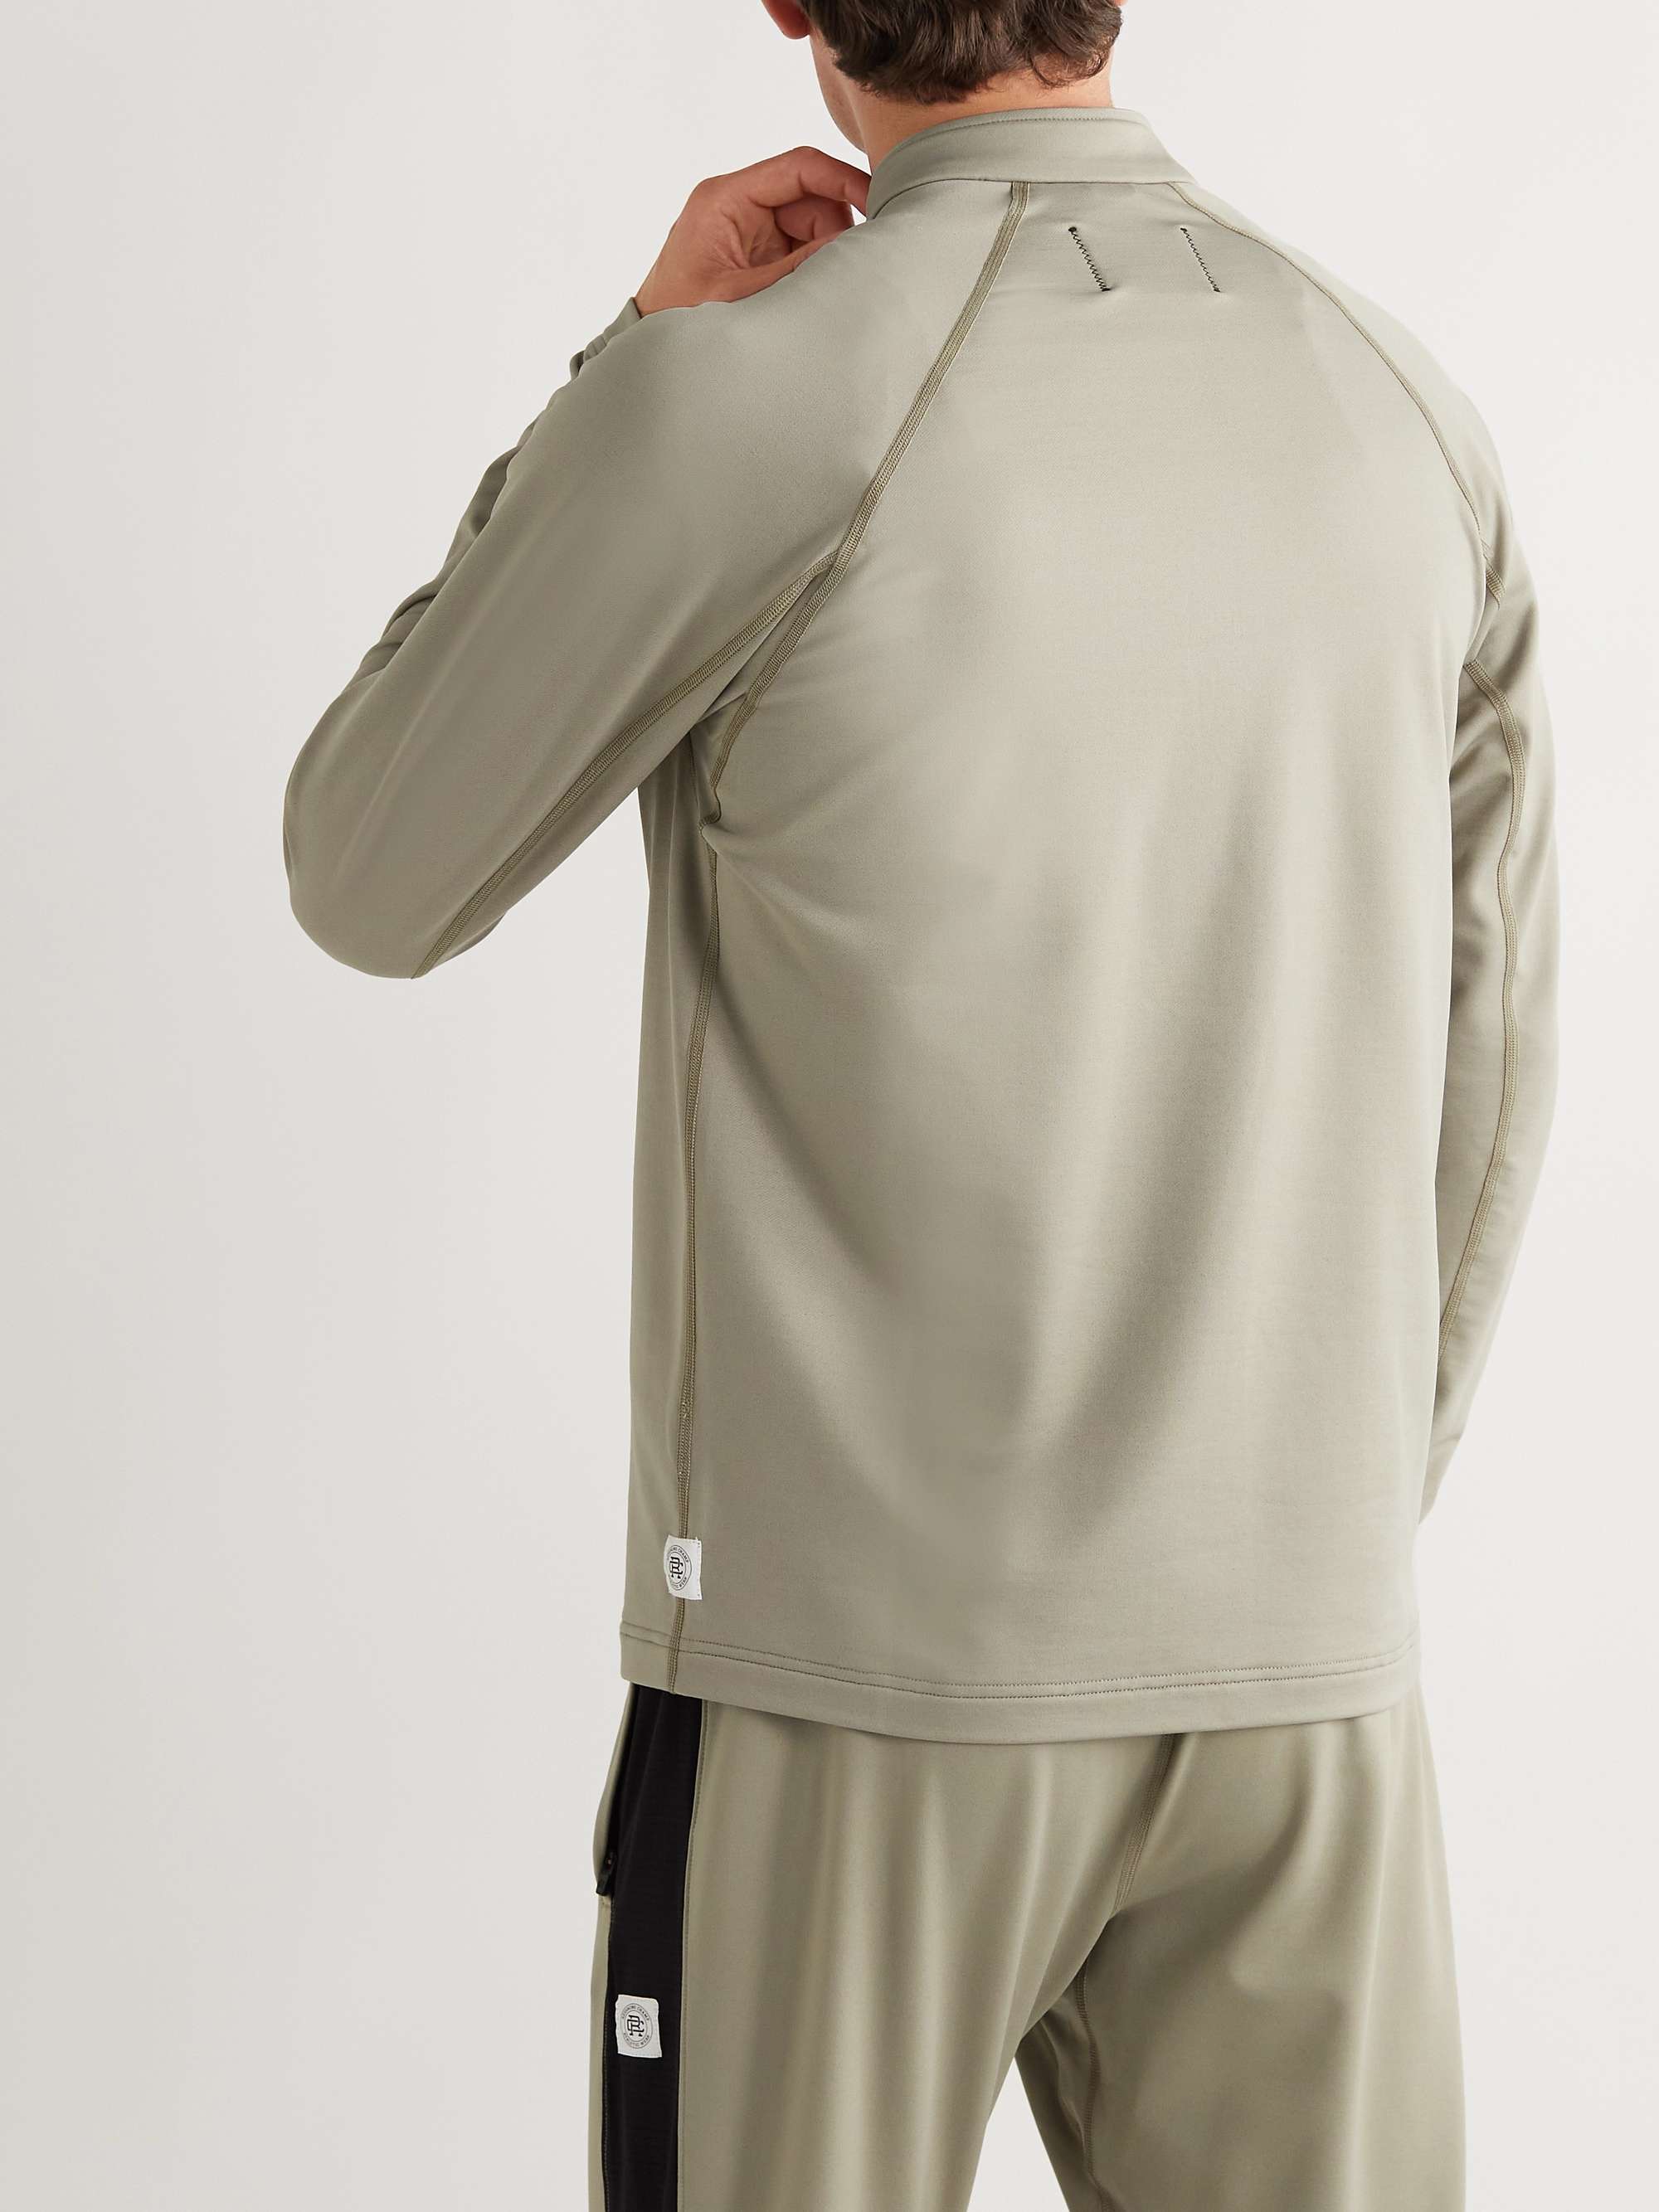 REIGNING CHAMP Polartec Power Stretch Pro Half-Zip Sweatshirt